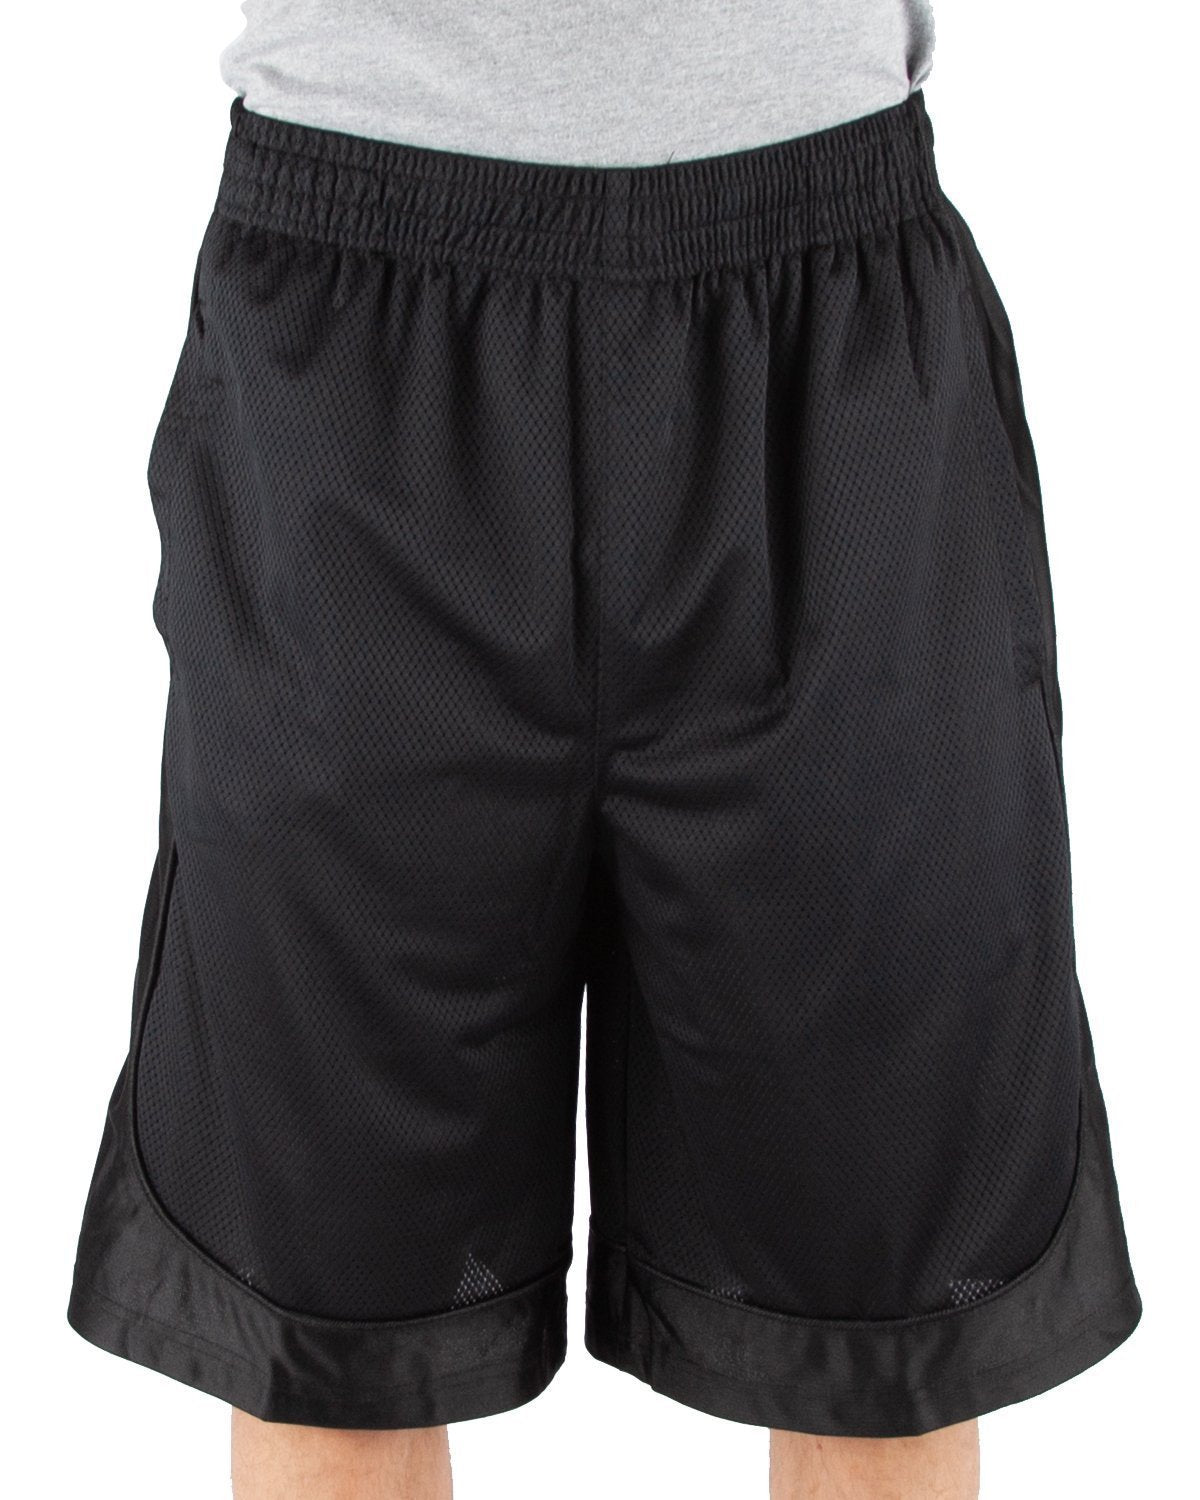 Mesh Shorts XL / Black